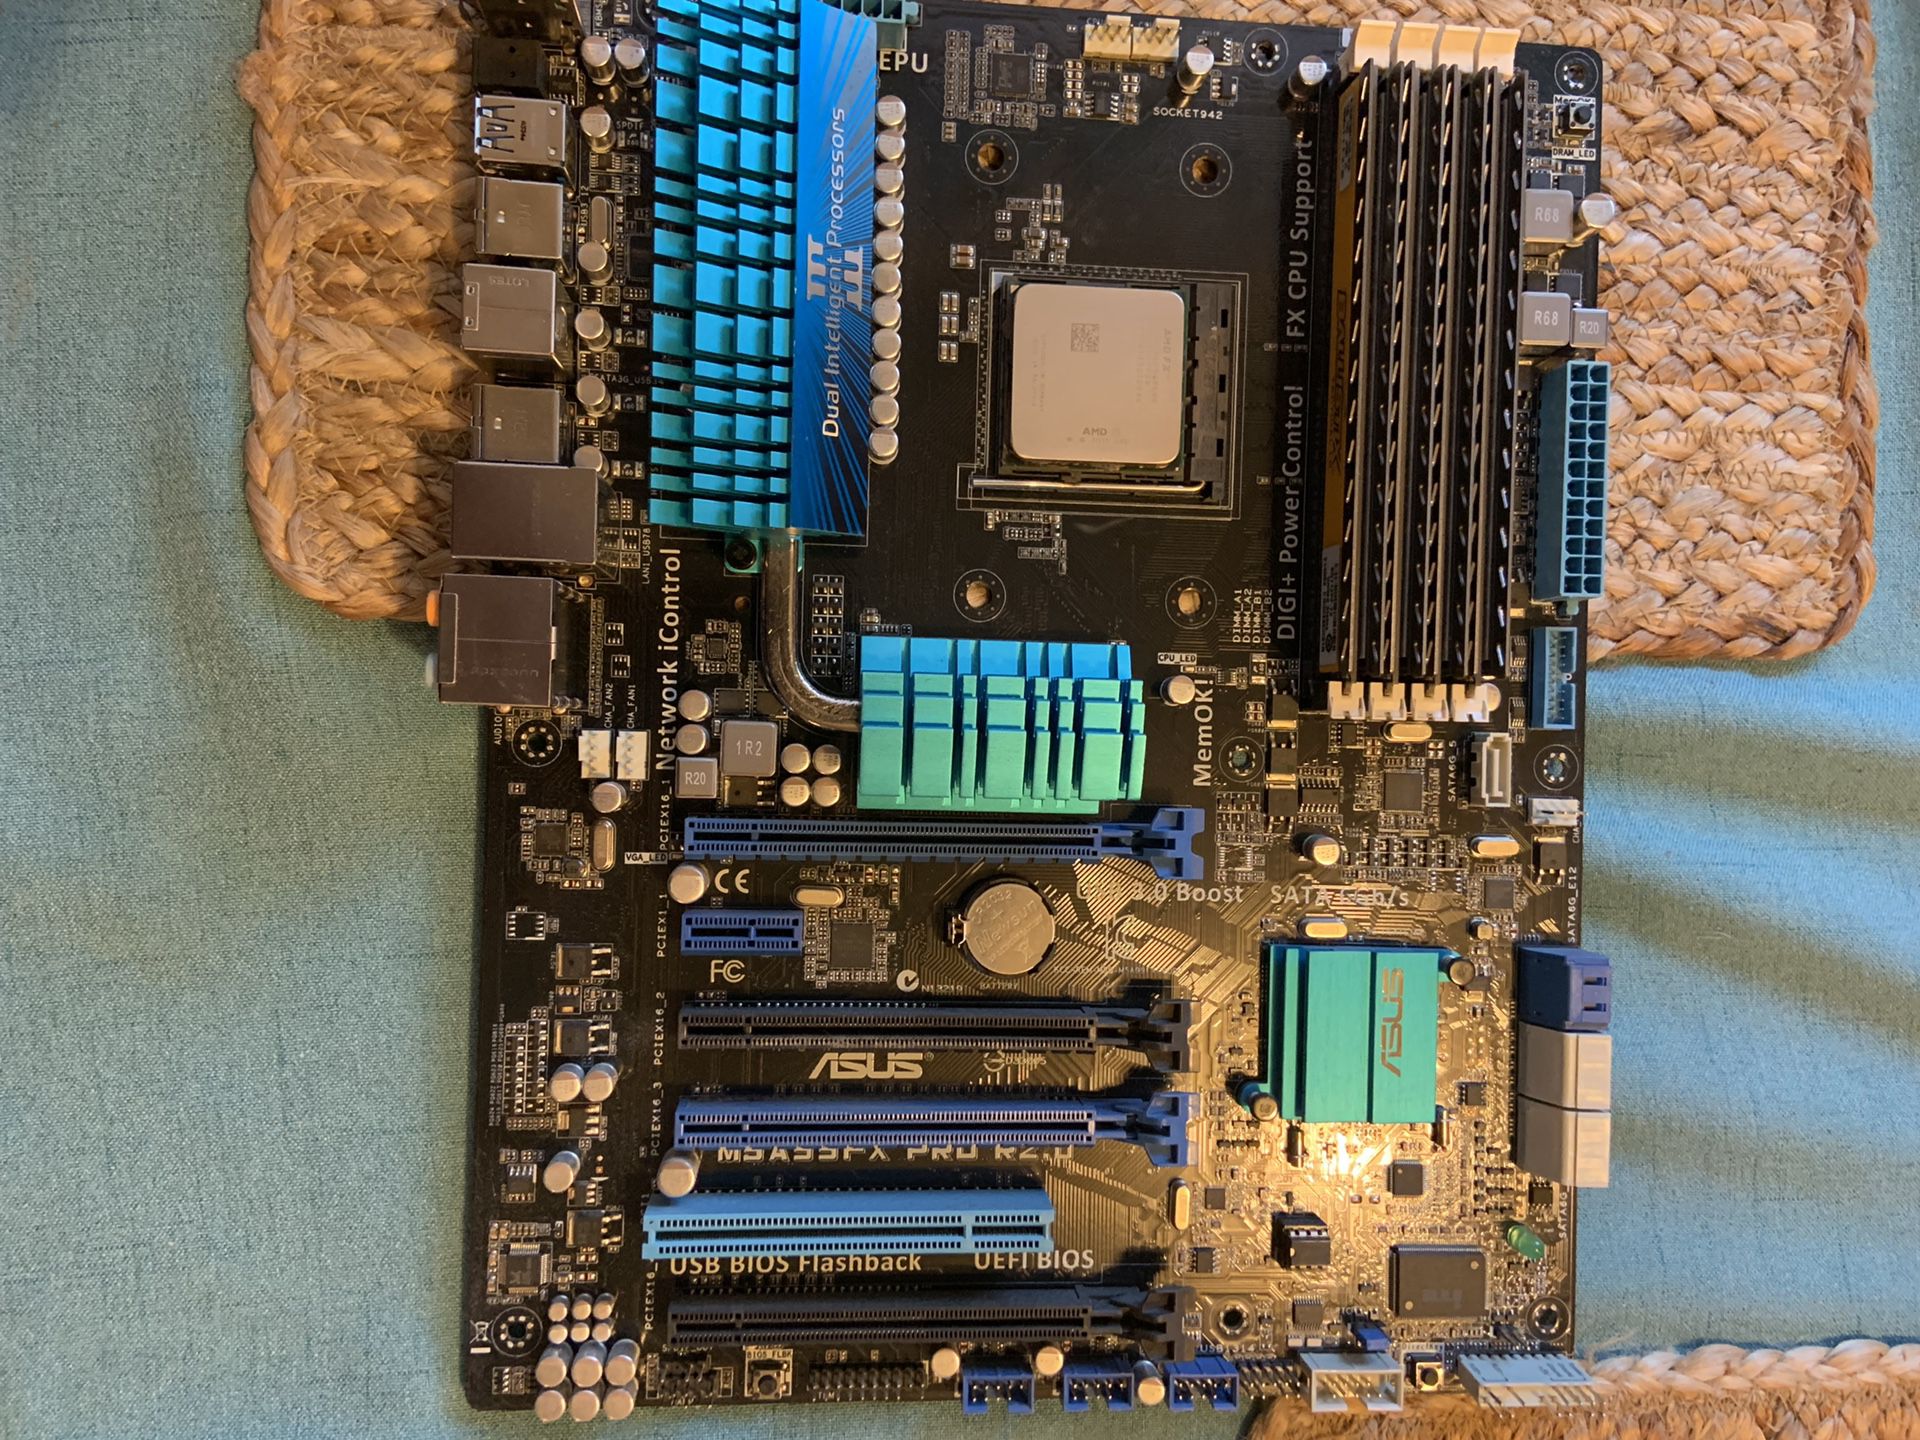 Motherboard, AMD FX-9590 processor and 16gb ram